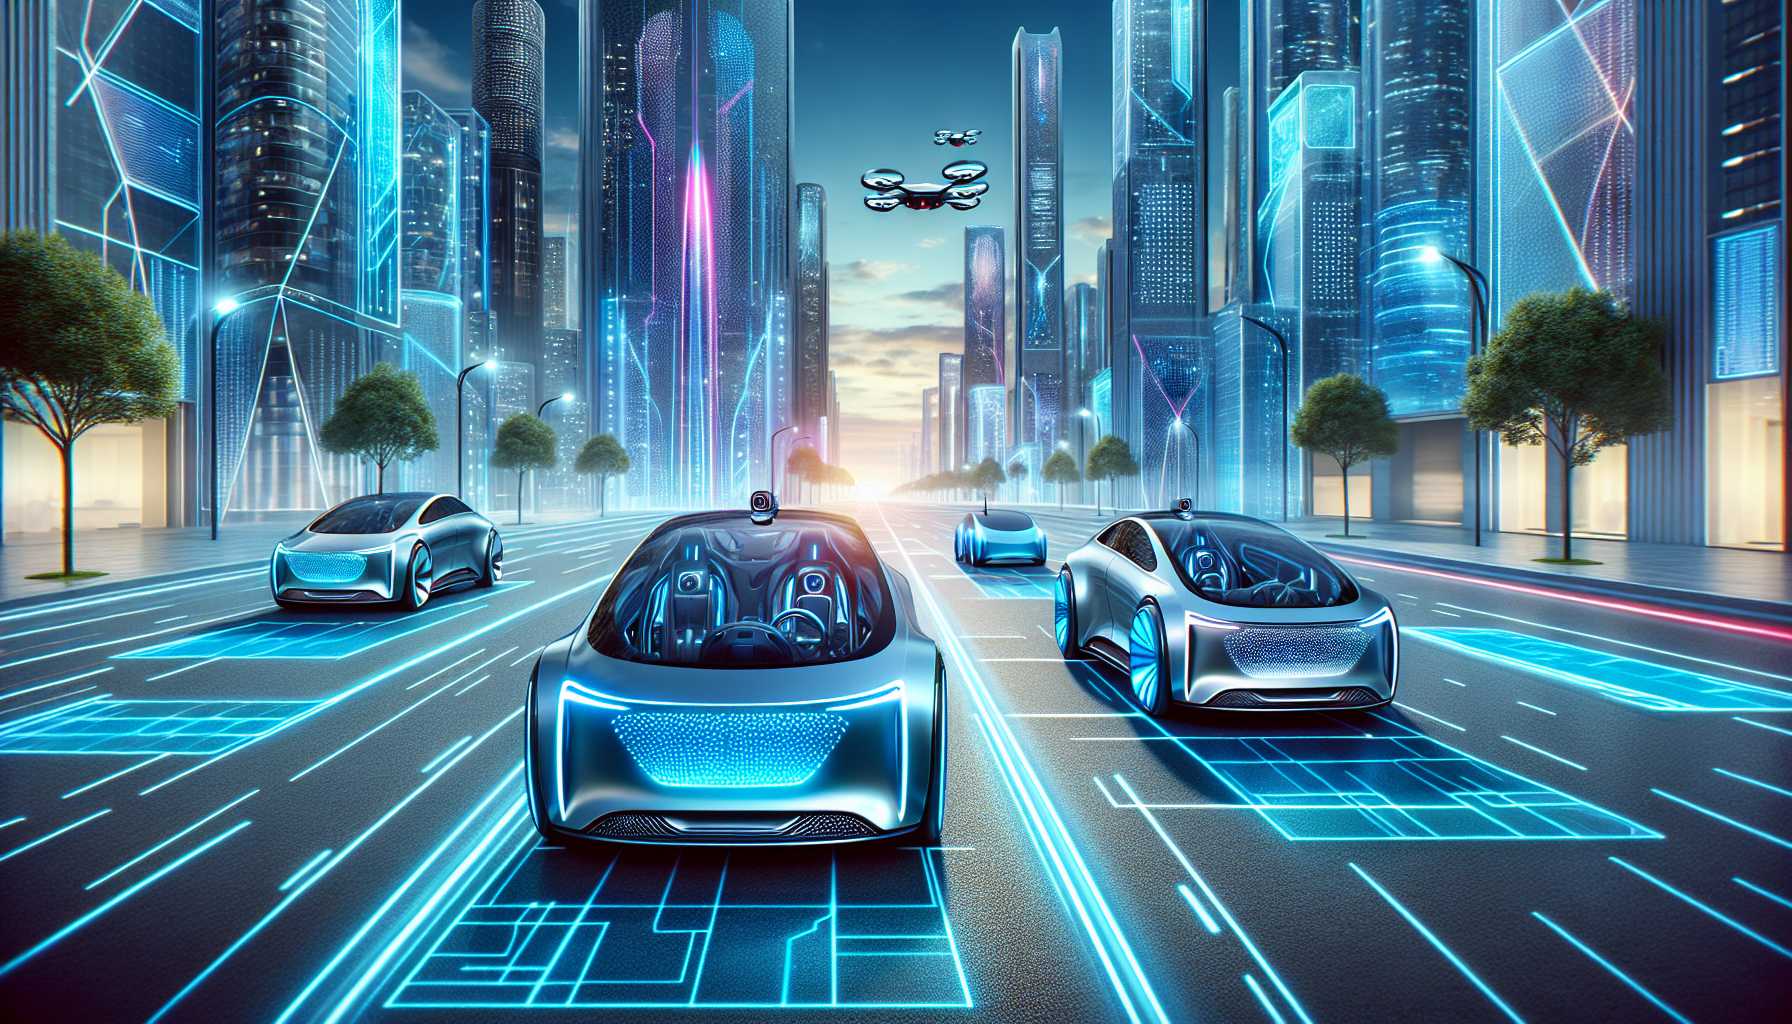 Futuristic autonomous Tesla cars